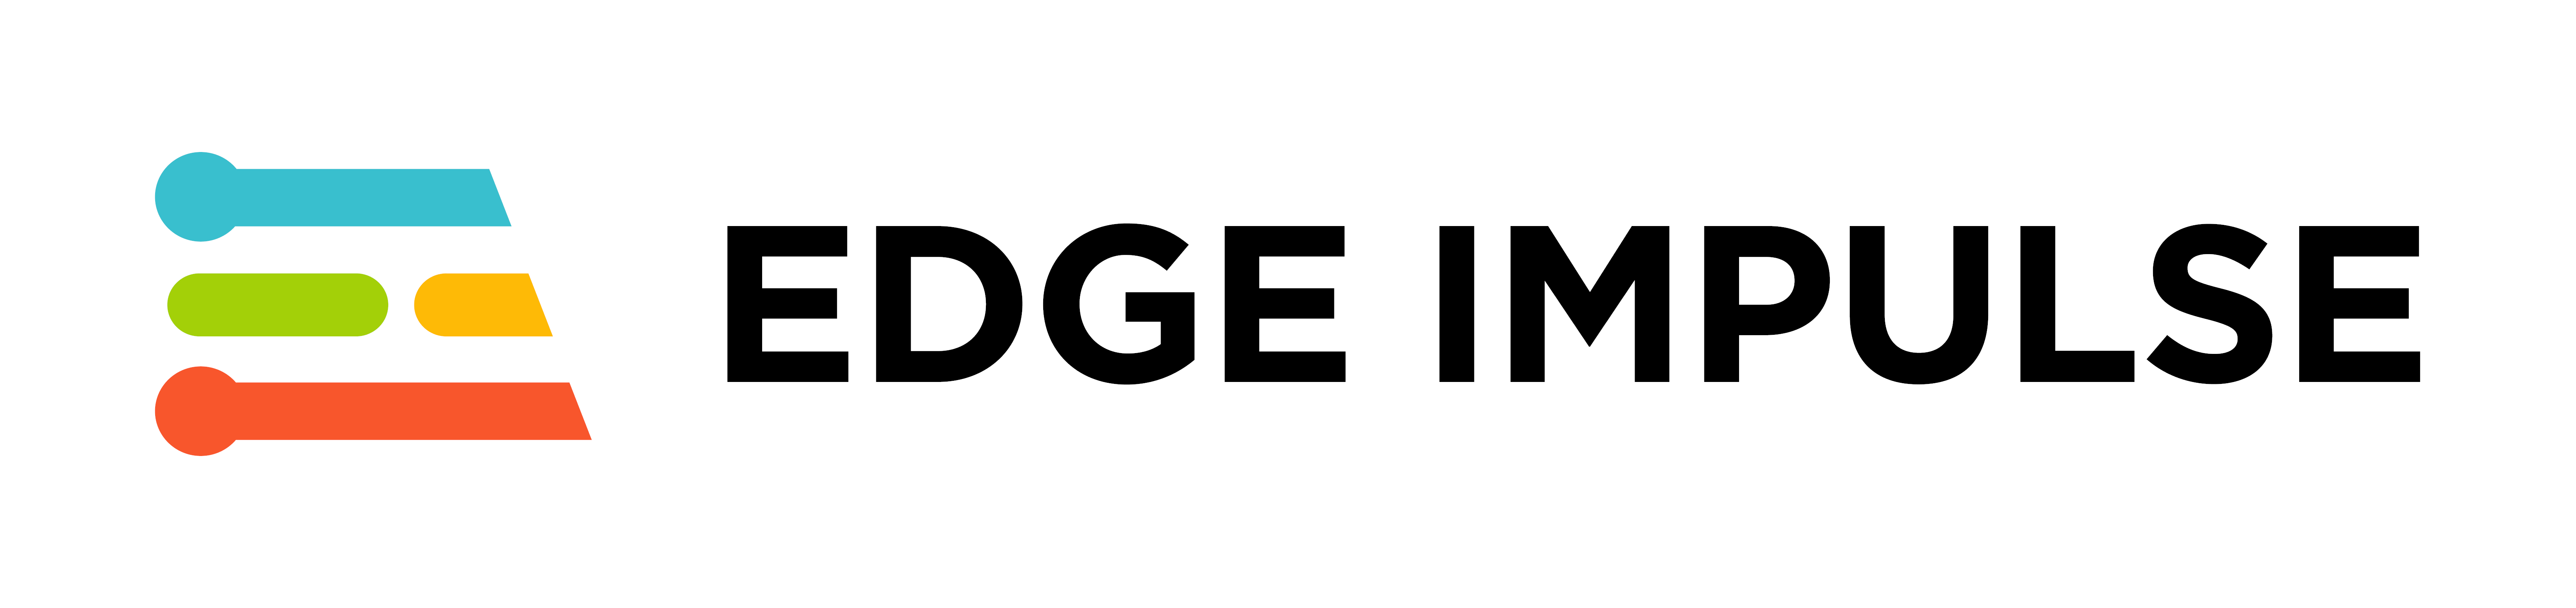 Edge Impulse logo